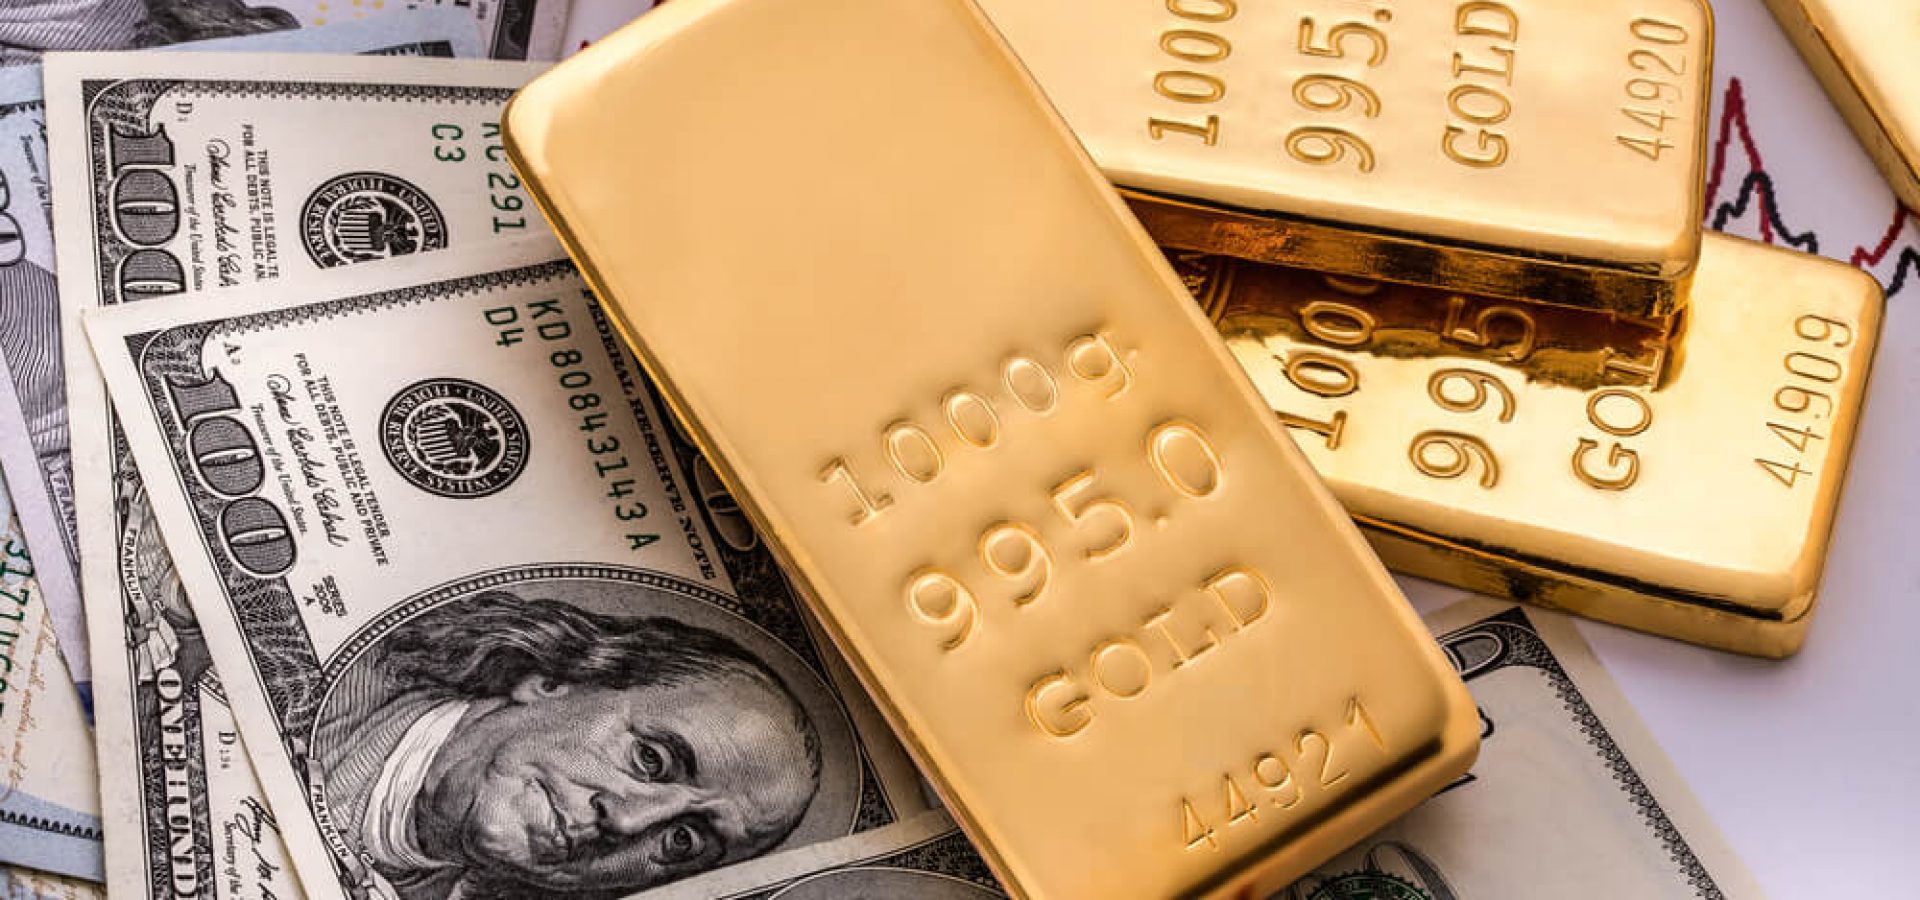 Gold bars on top of dollar bills